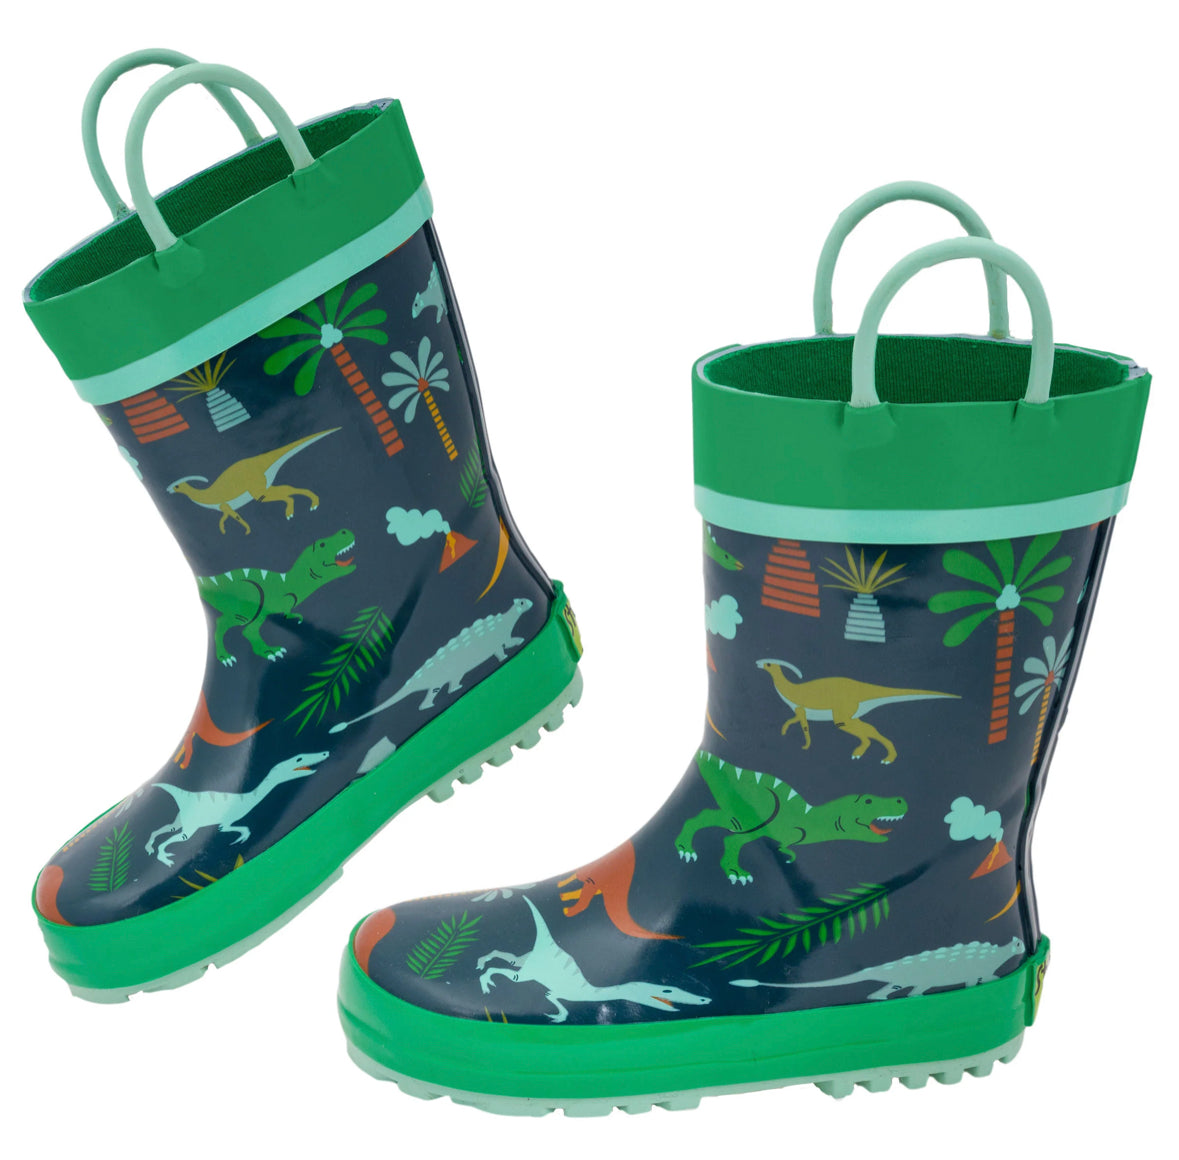 A pair of Stephen Joseph Green Dinosaur children's rain boots.